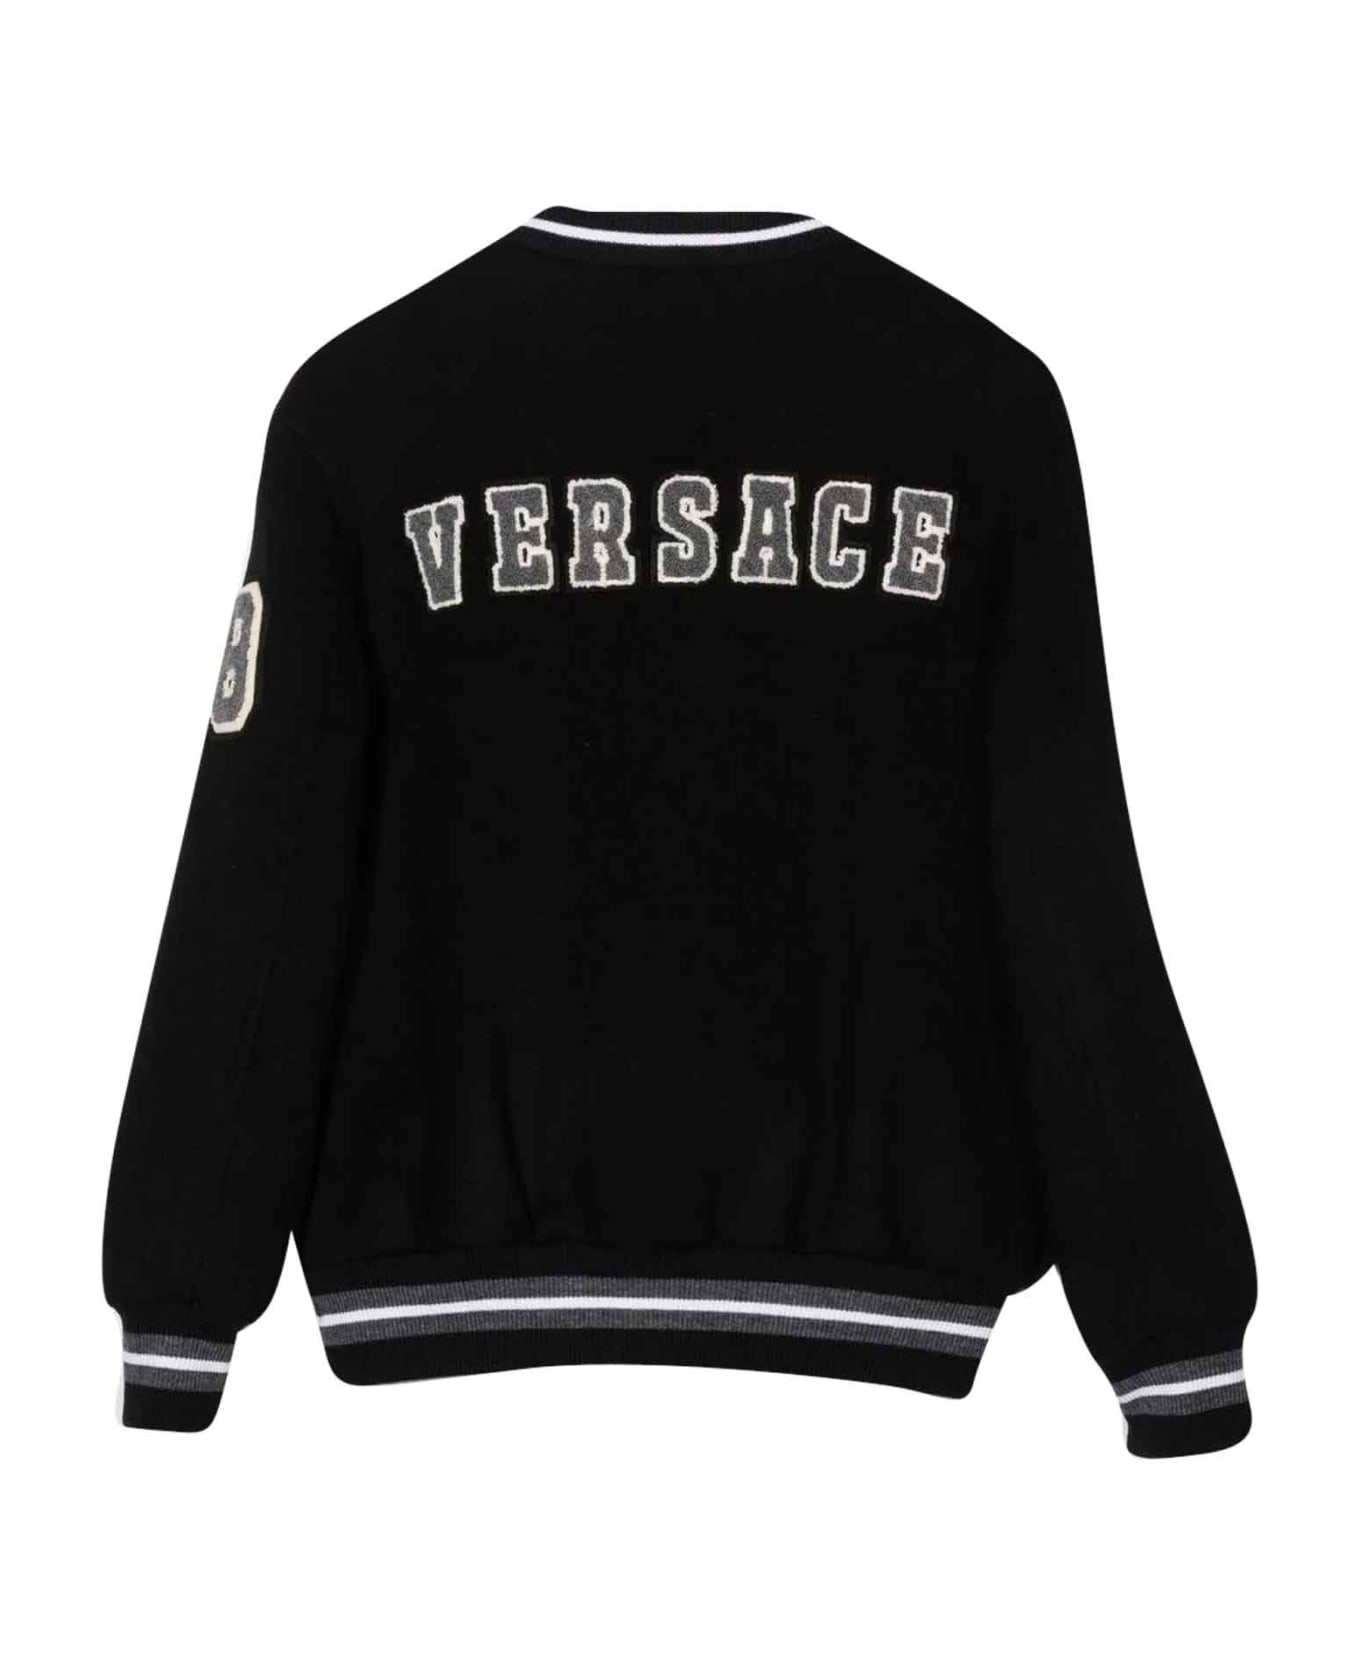 Versace Black Bomber Jacket Unisex Kids - Nero/grigio